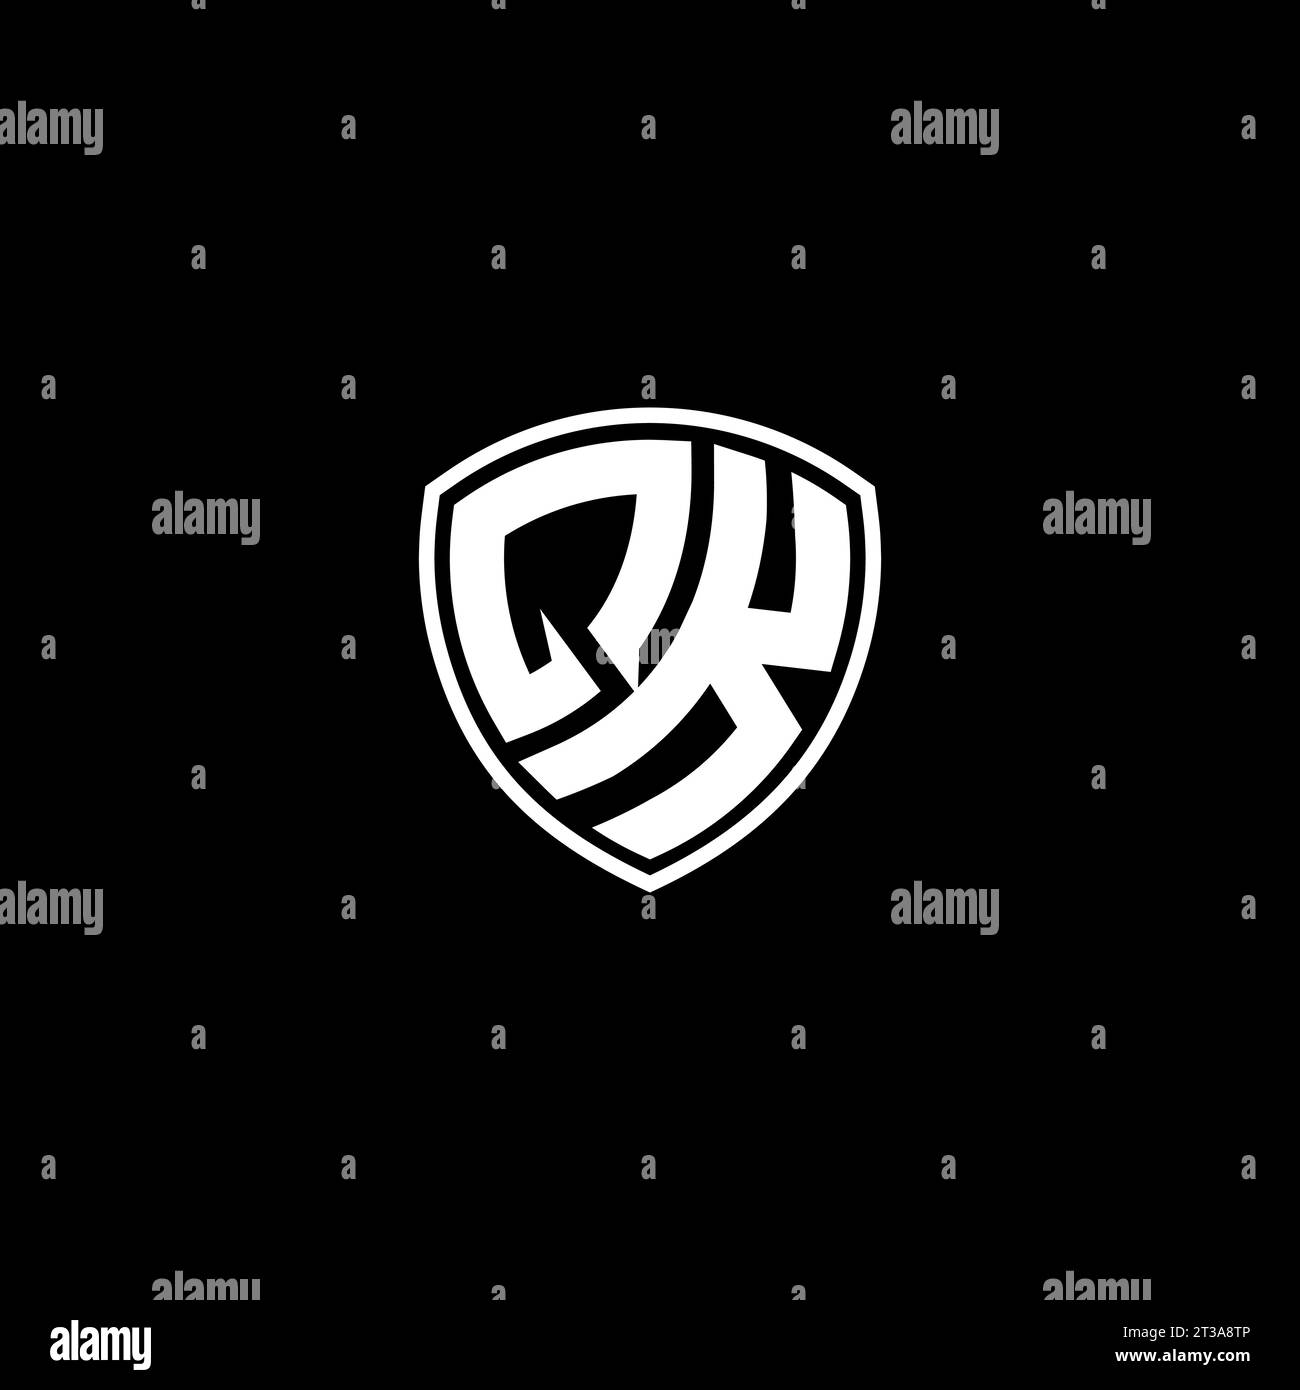 QK logo monogram emblem style with shield shape design template ideas Stock Vector